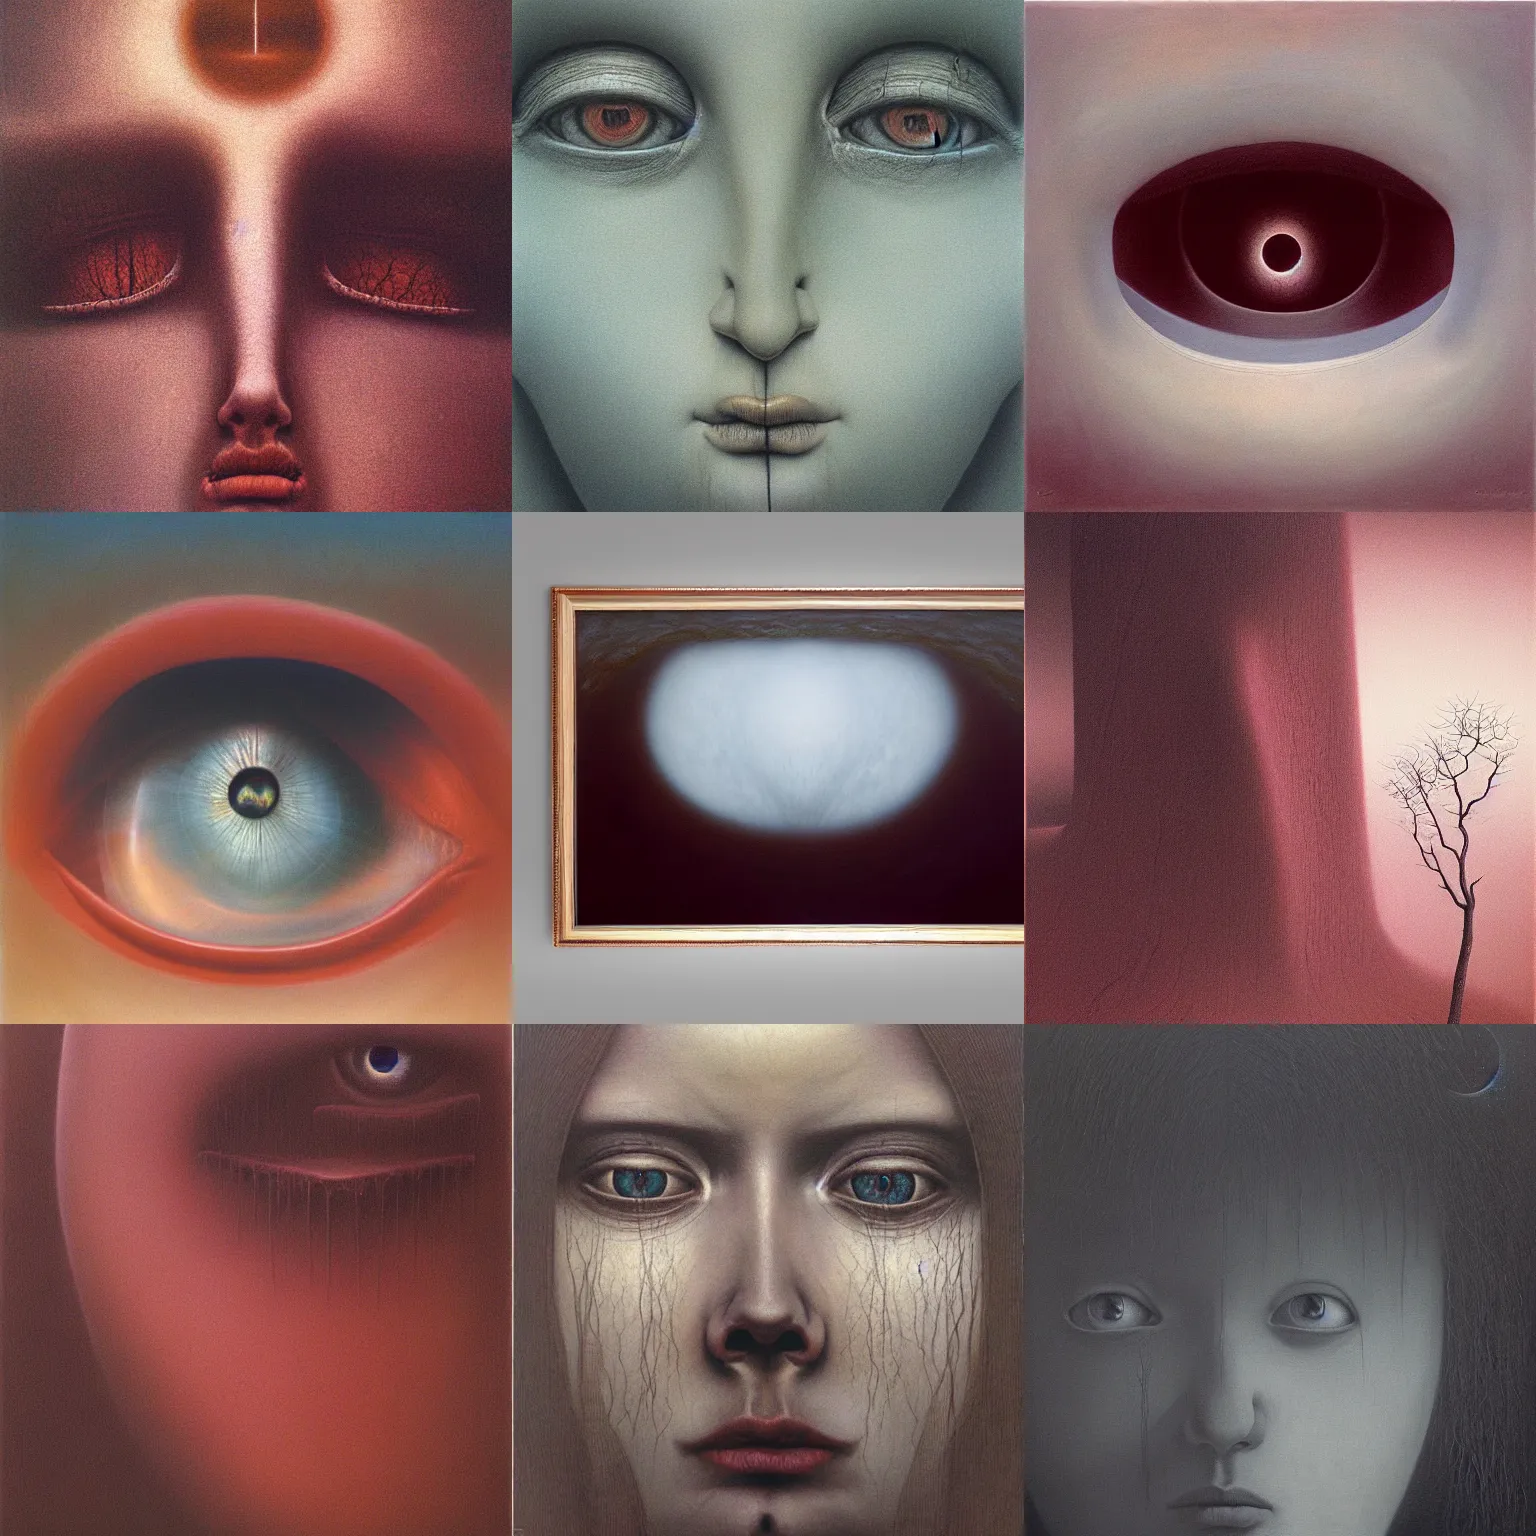 Prompt: her eyes wide by zdzisław beksinski, oil on canvas